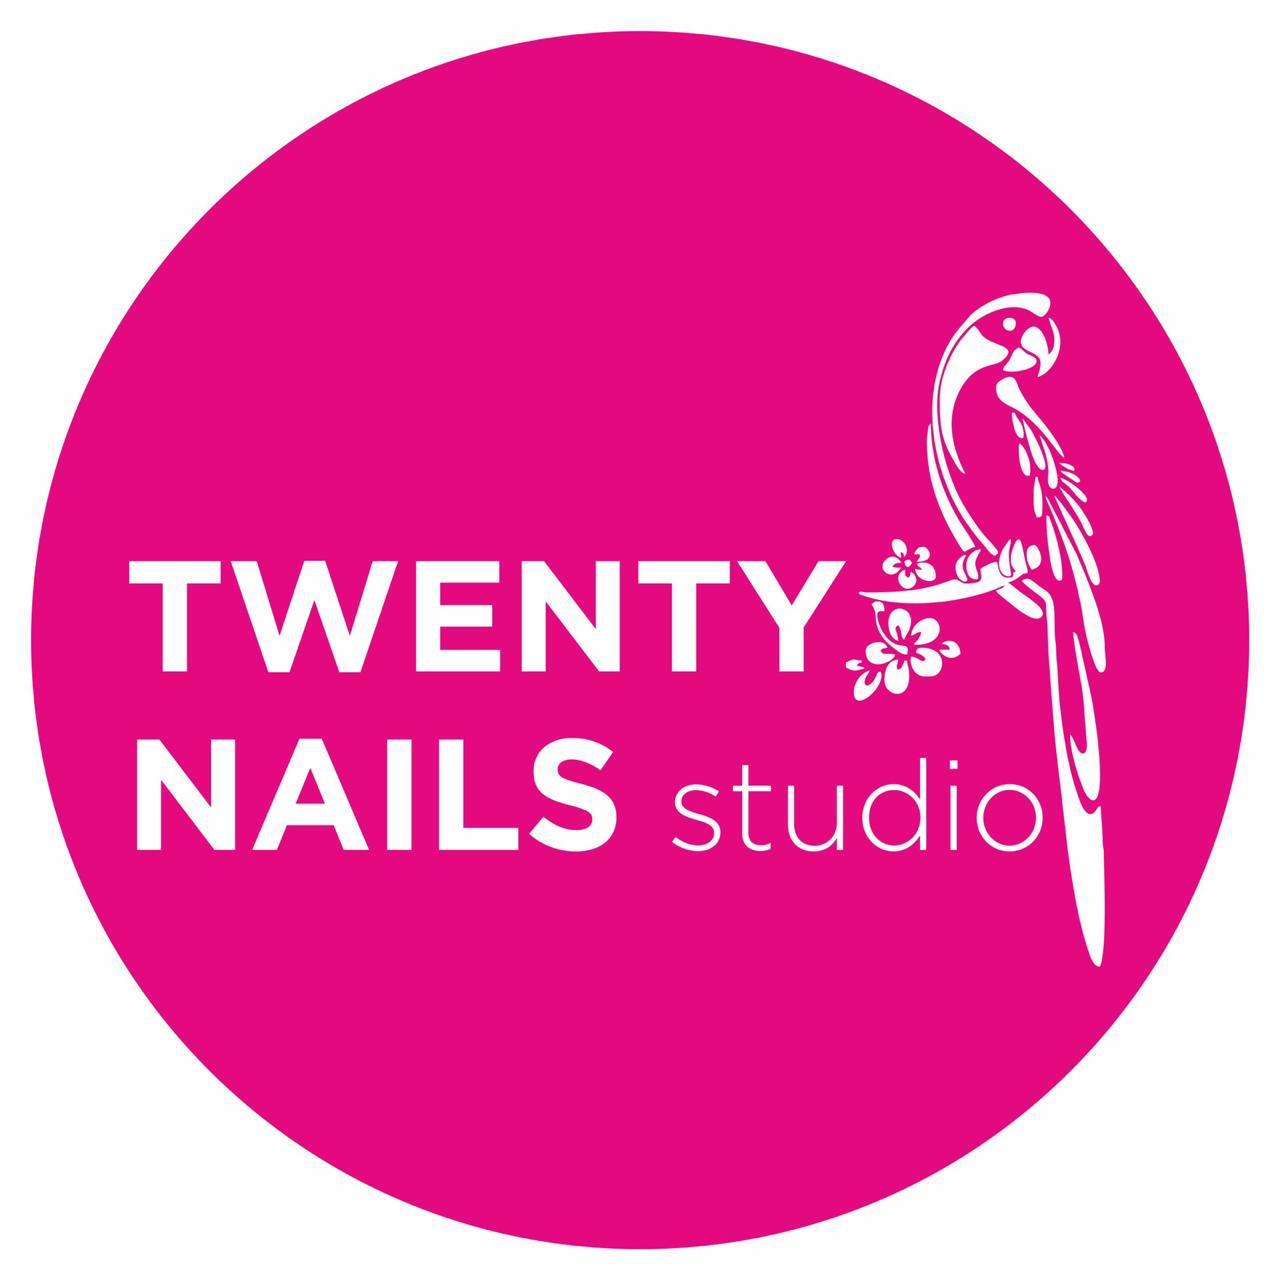 Twenty nails studio фото 1